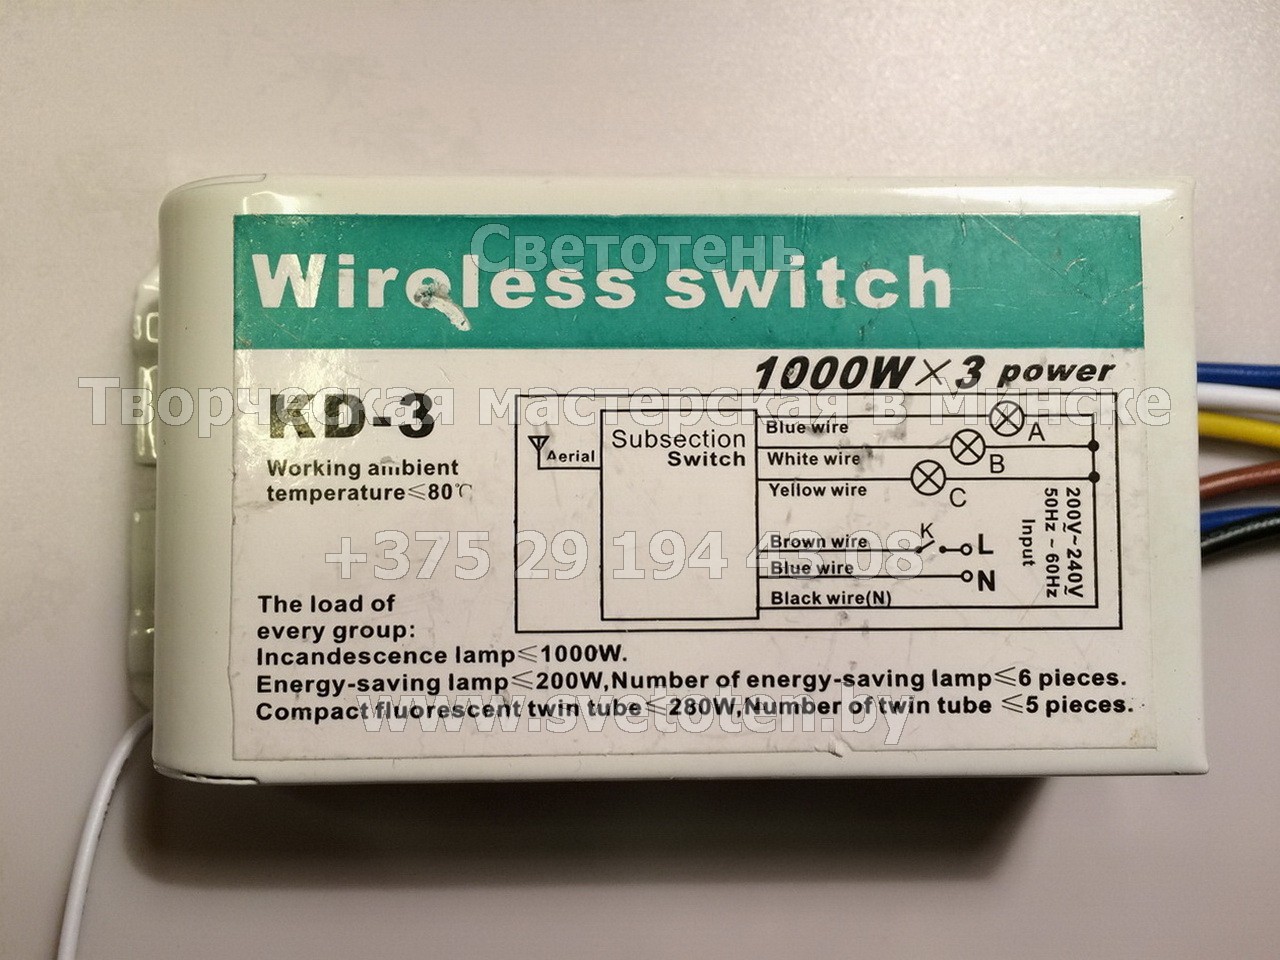 X 2 3 1000. Блок управления люстрой Kingda Wireless Switch KD-3 1000. Kingda KD-3 Wireless блок. Блок управления Wireless Switch y-7e 1000w. Kingda KD-3 Wireless Switch 1000w 3 Power.